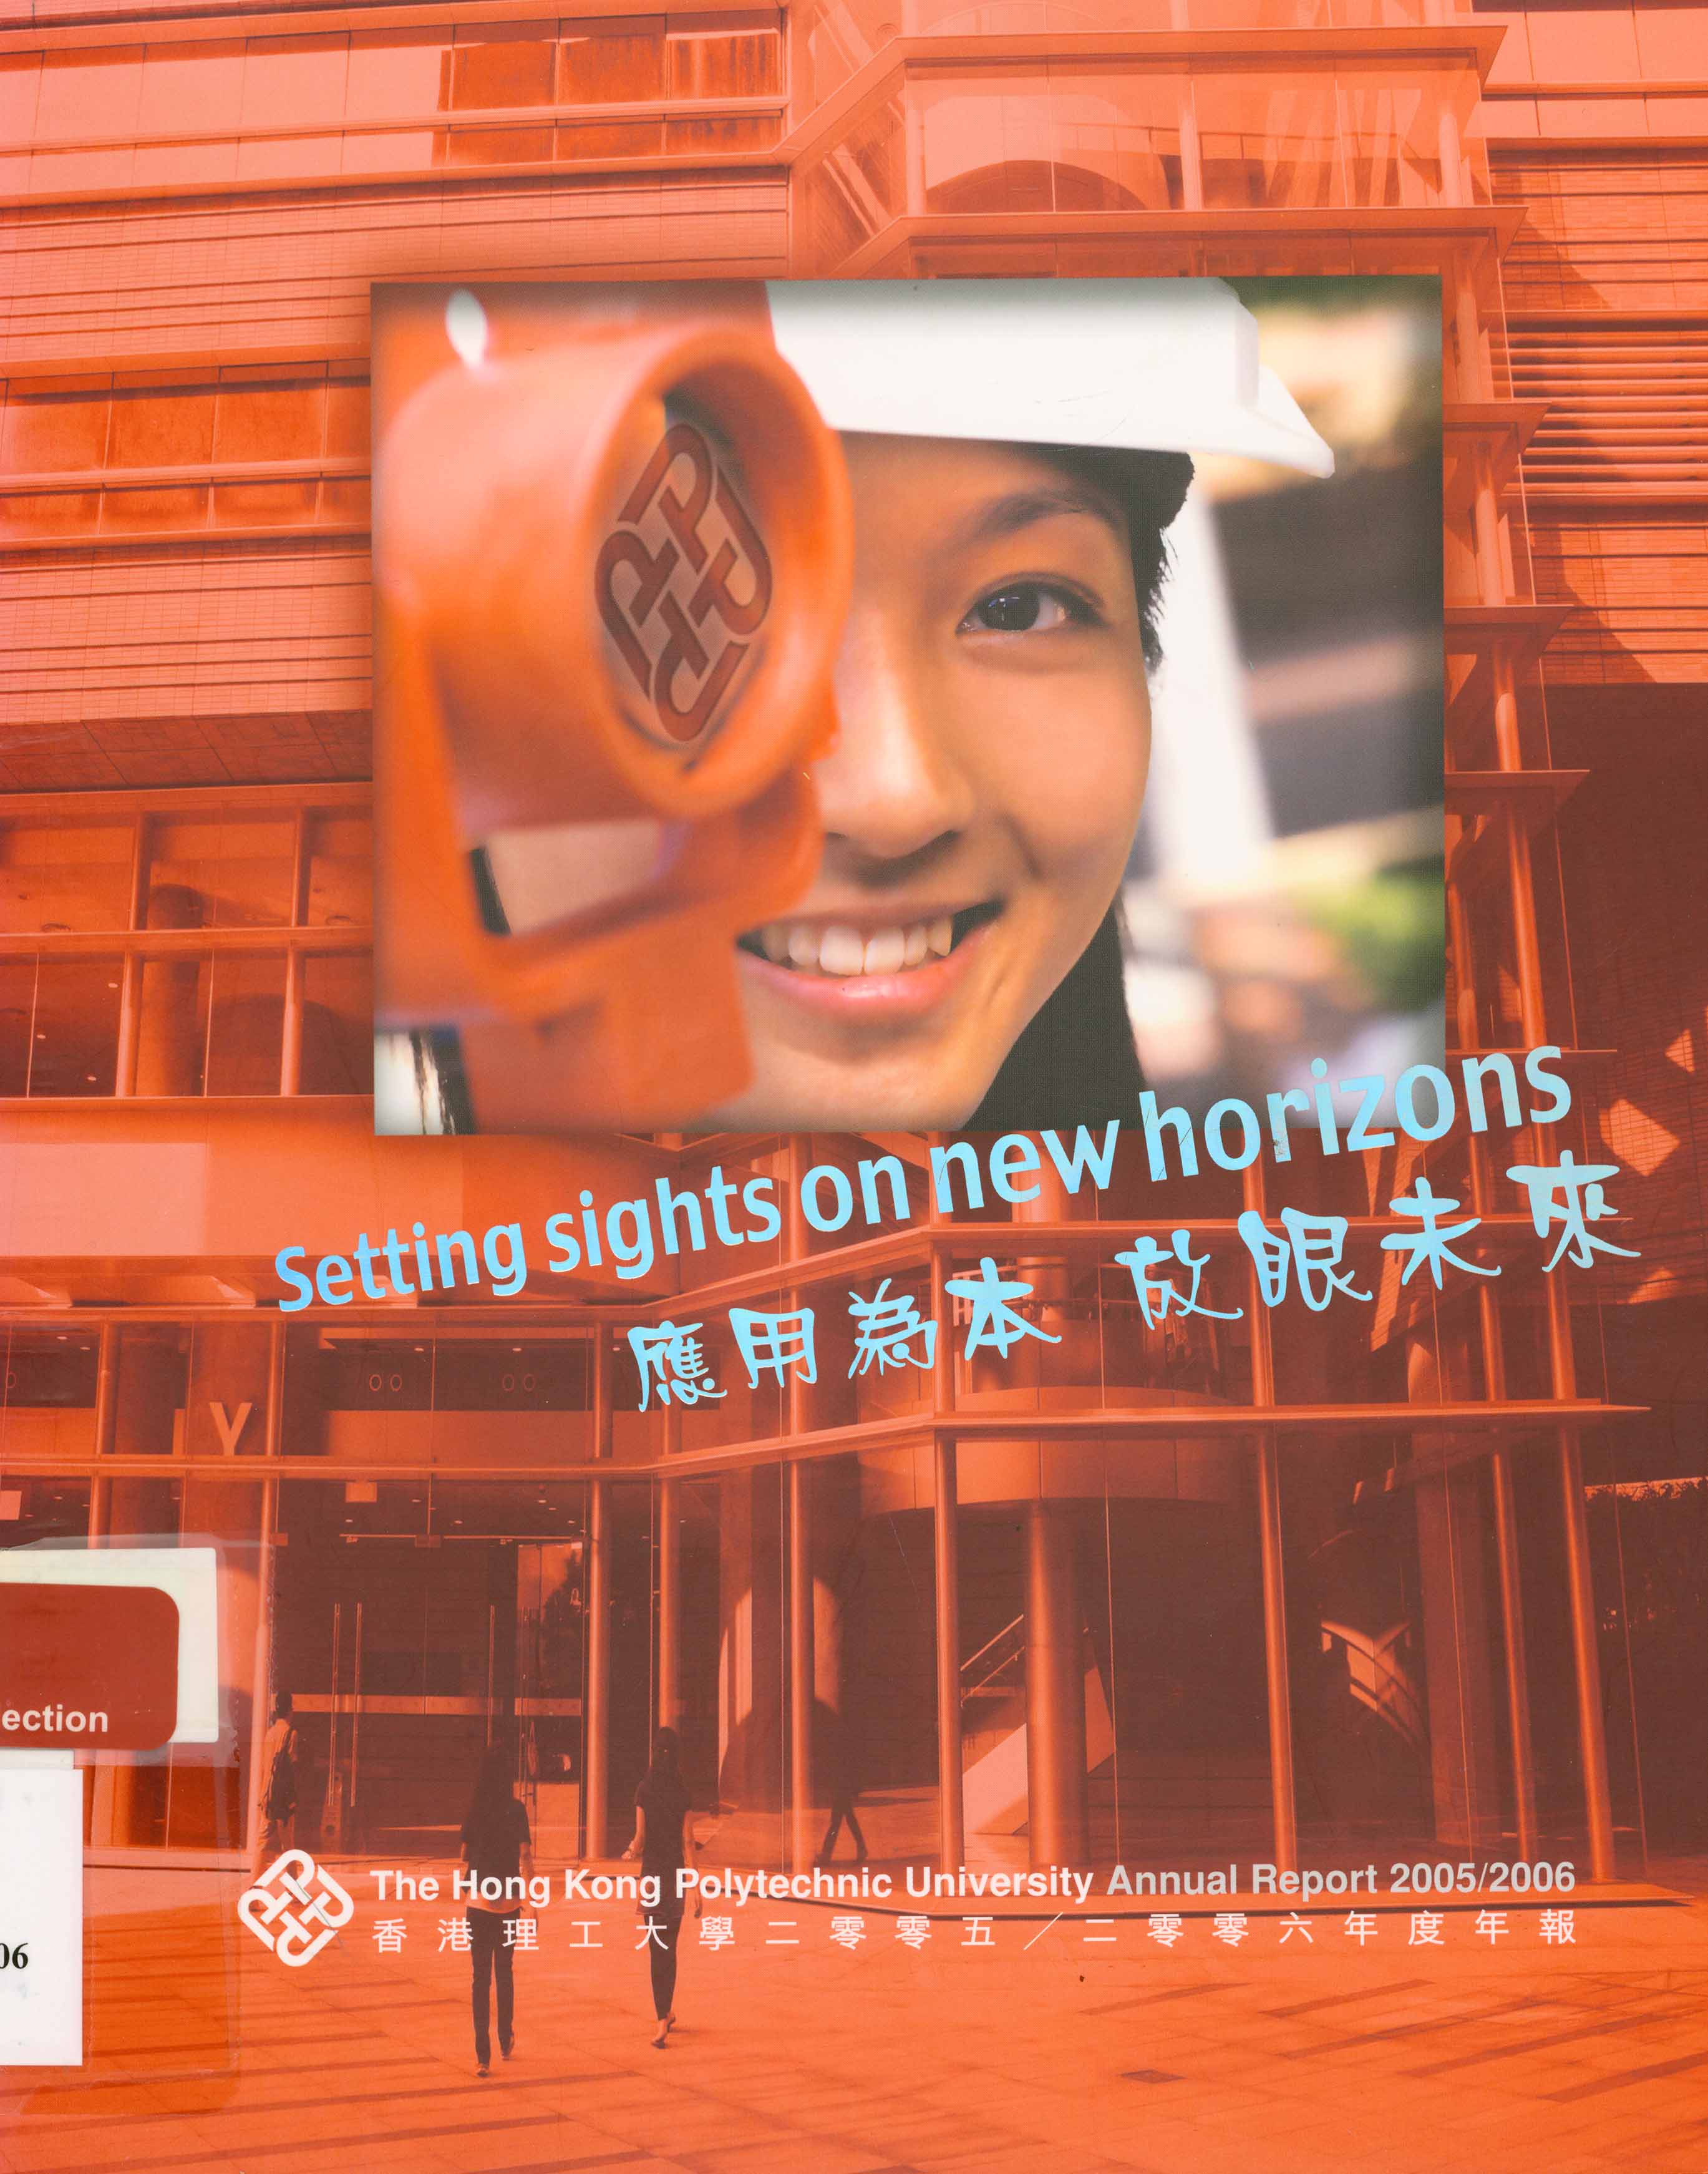 The Hong Kong Polytechnic University Annual Report 2005/06